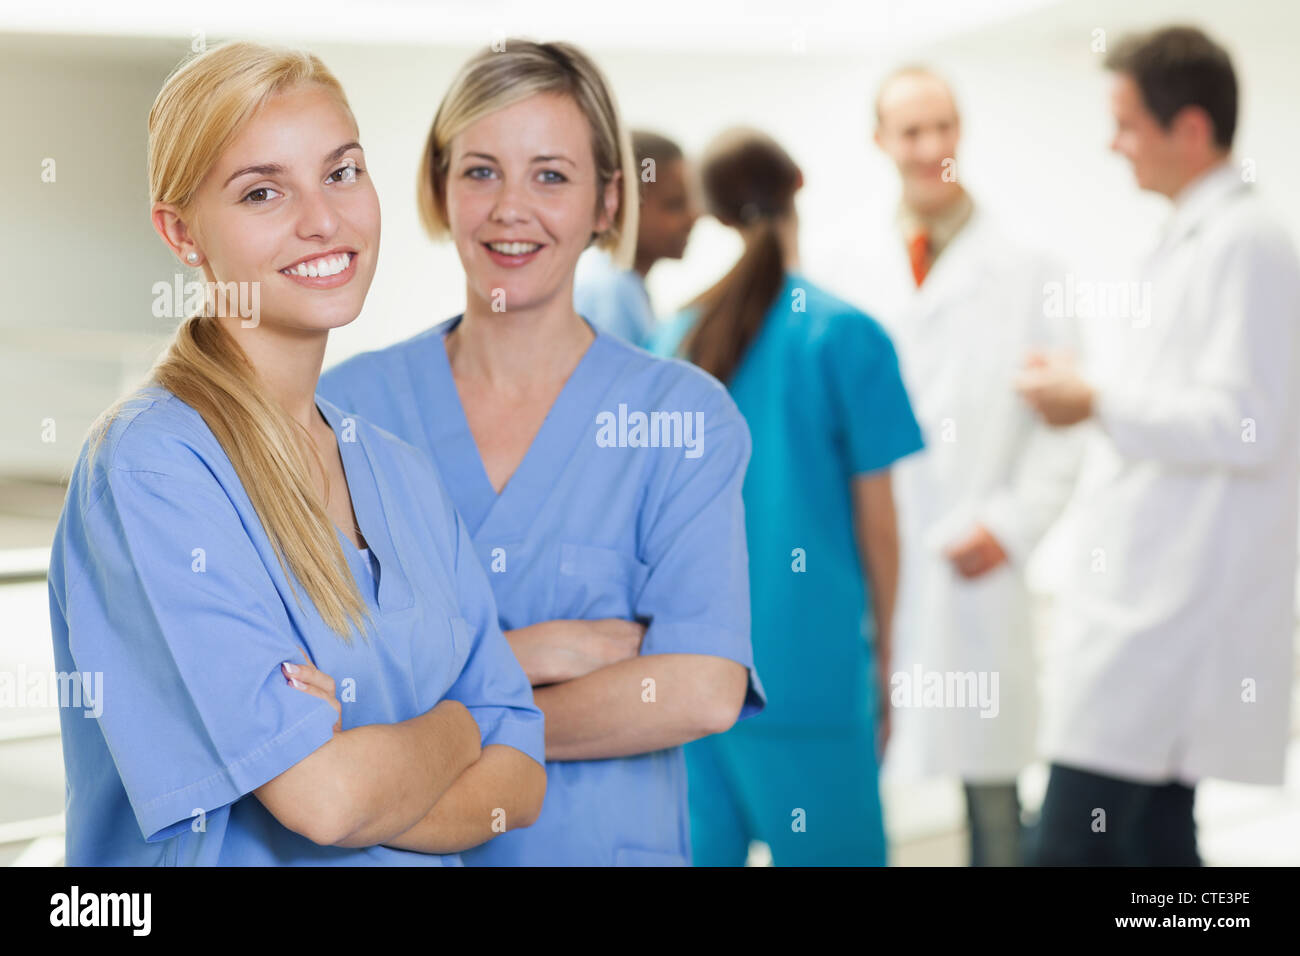 Nurses looking at camera while smiling Stock Photo